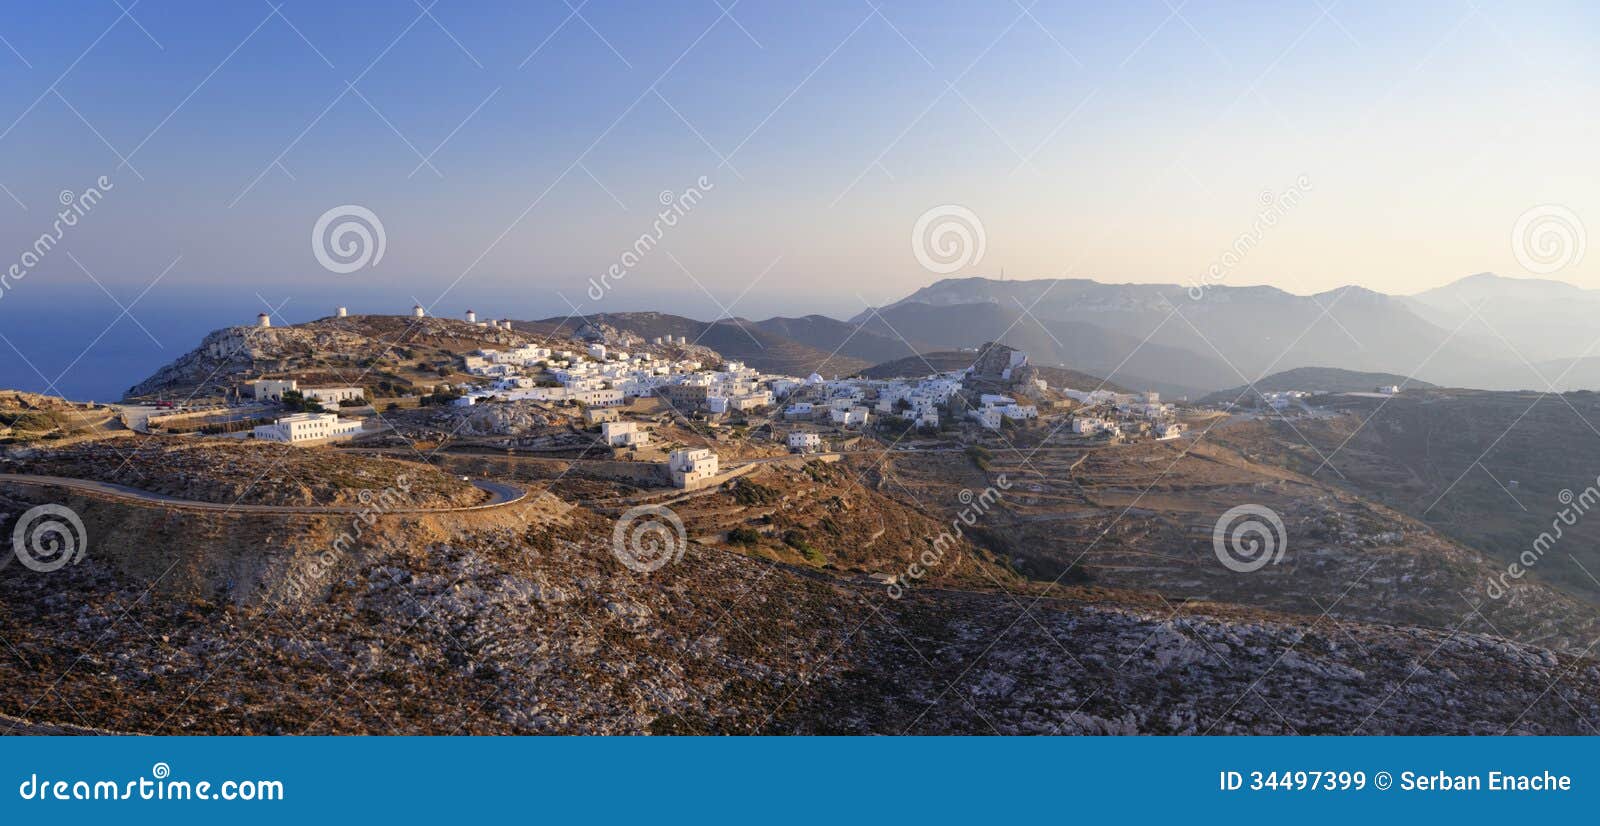 chora village on amorgos island